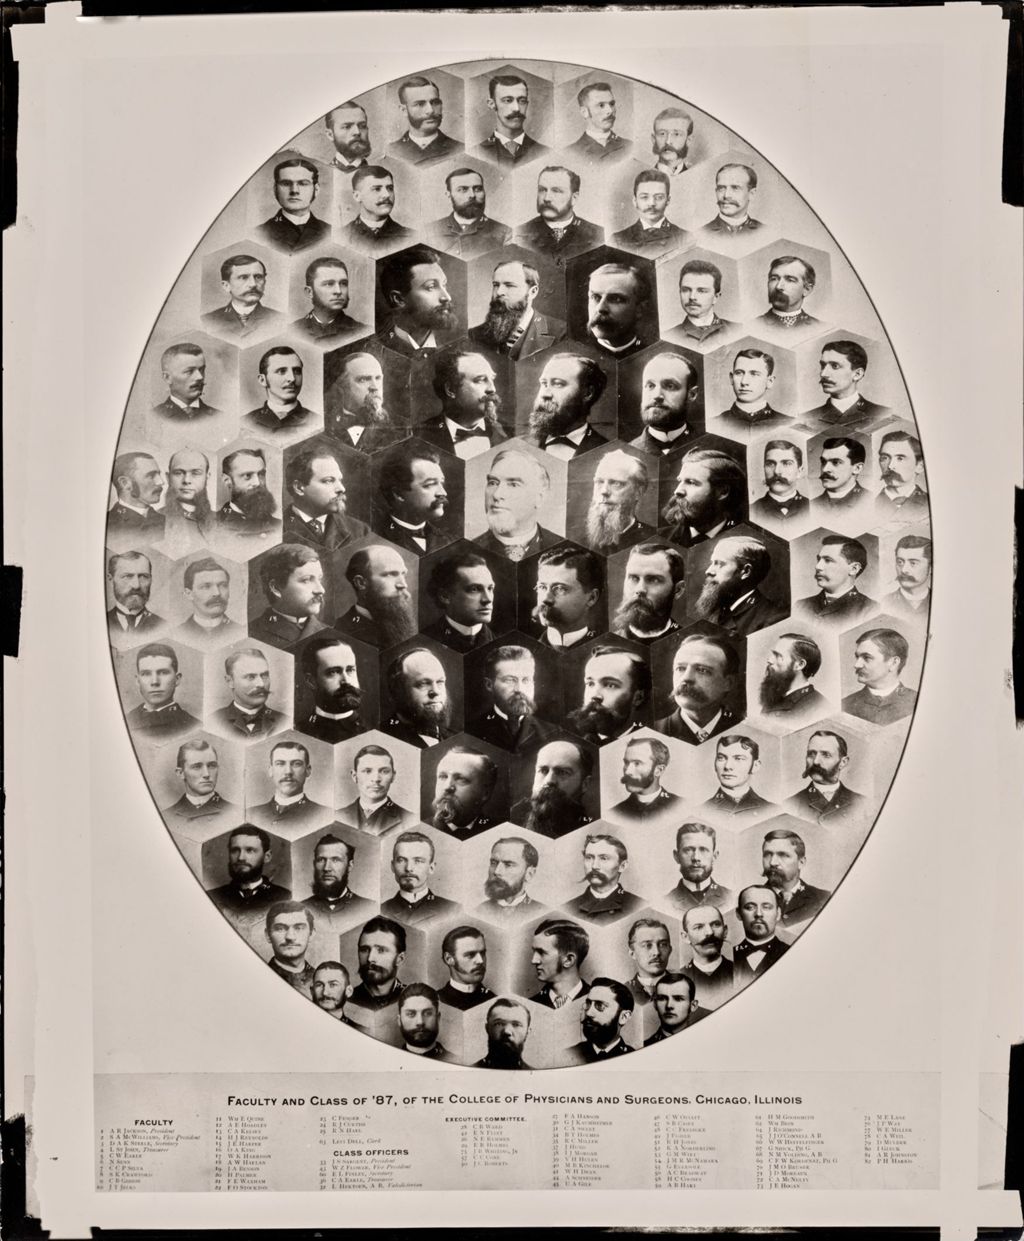 Miniature of 1887 graduating class, University of Illinois College of Medicine